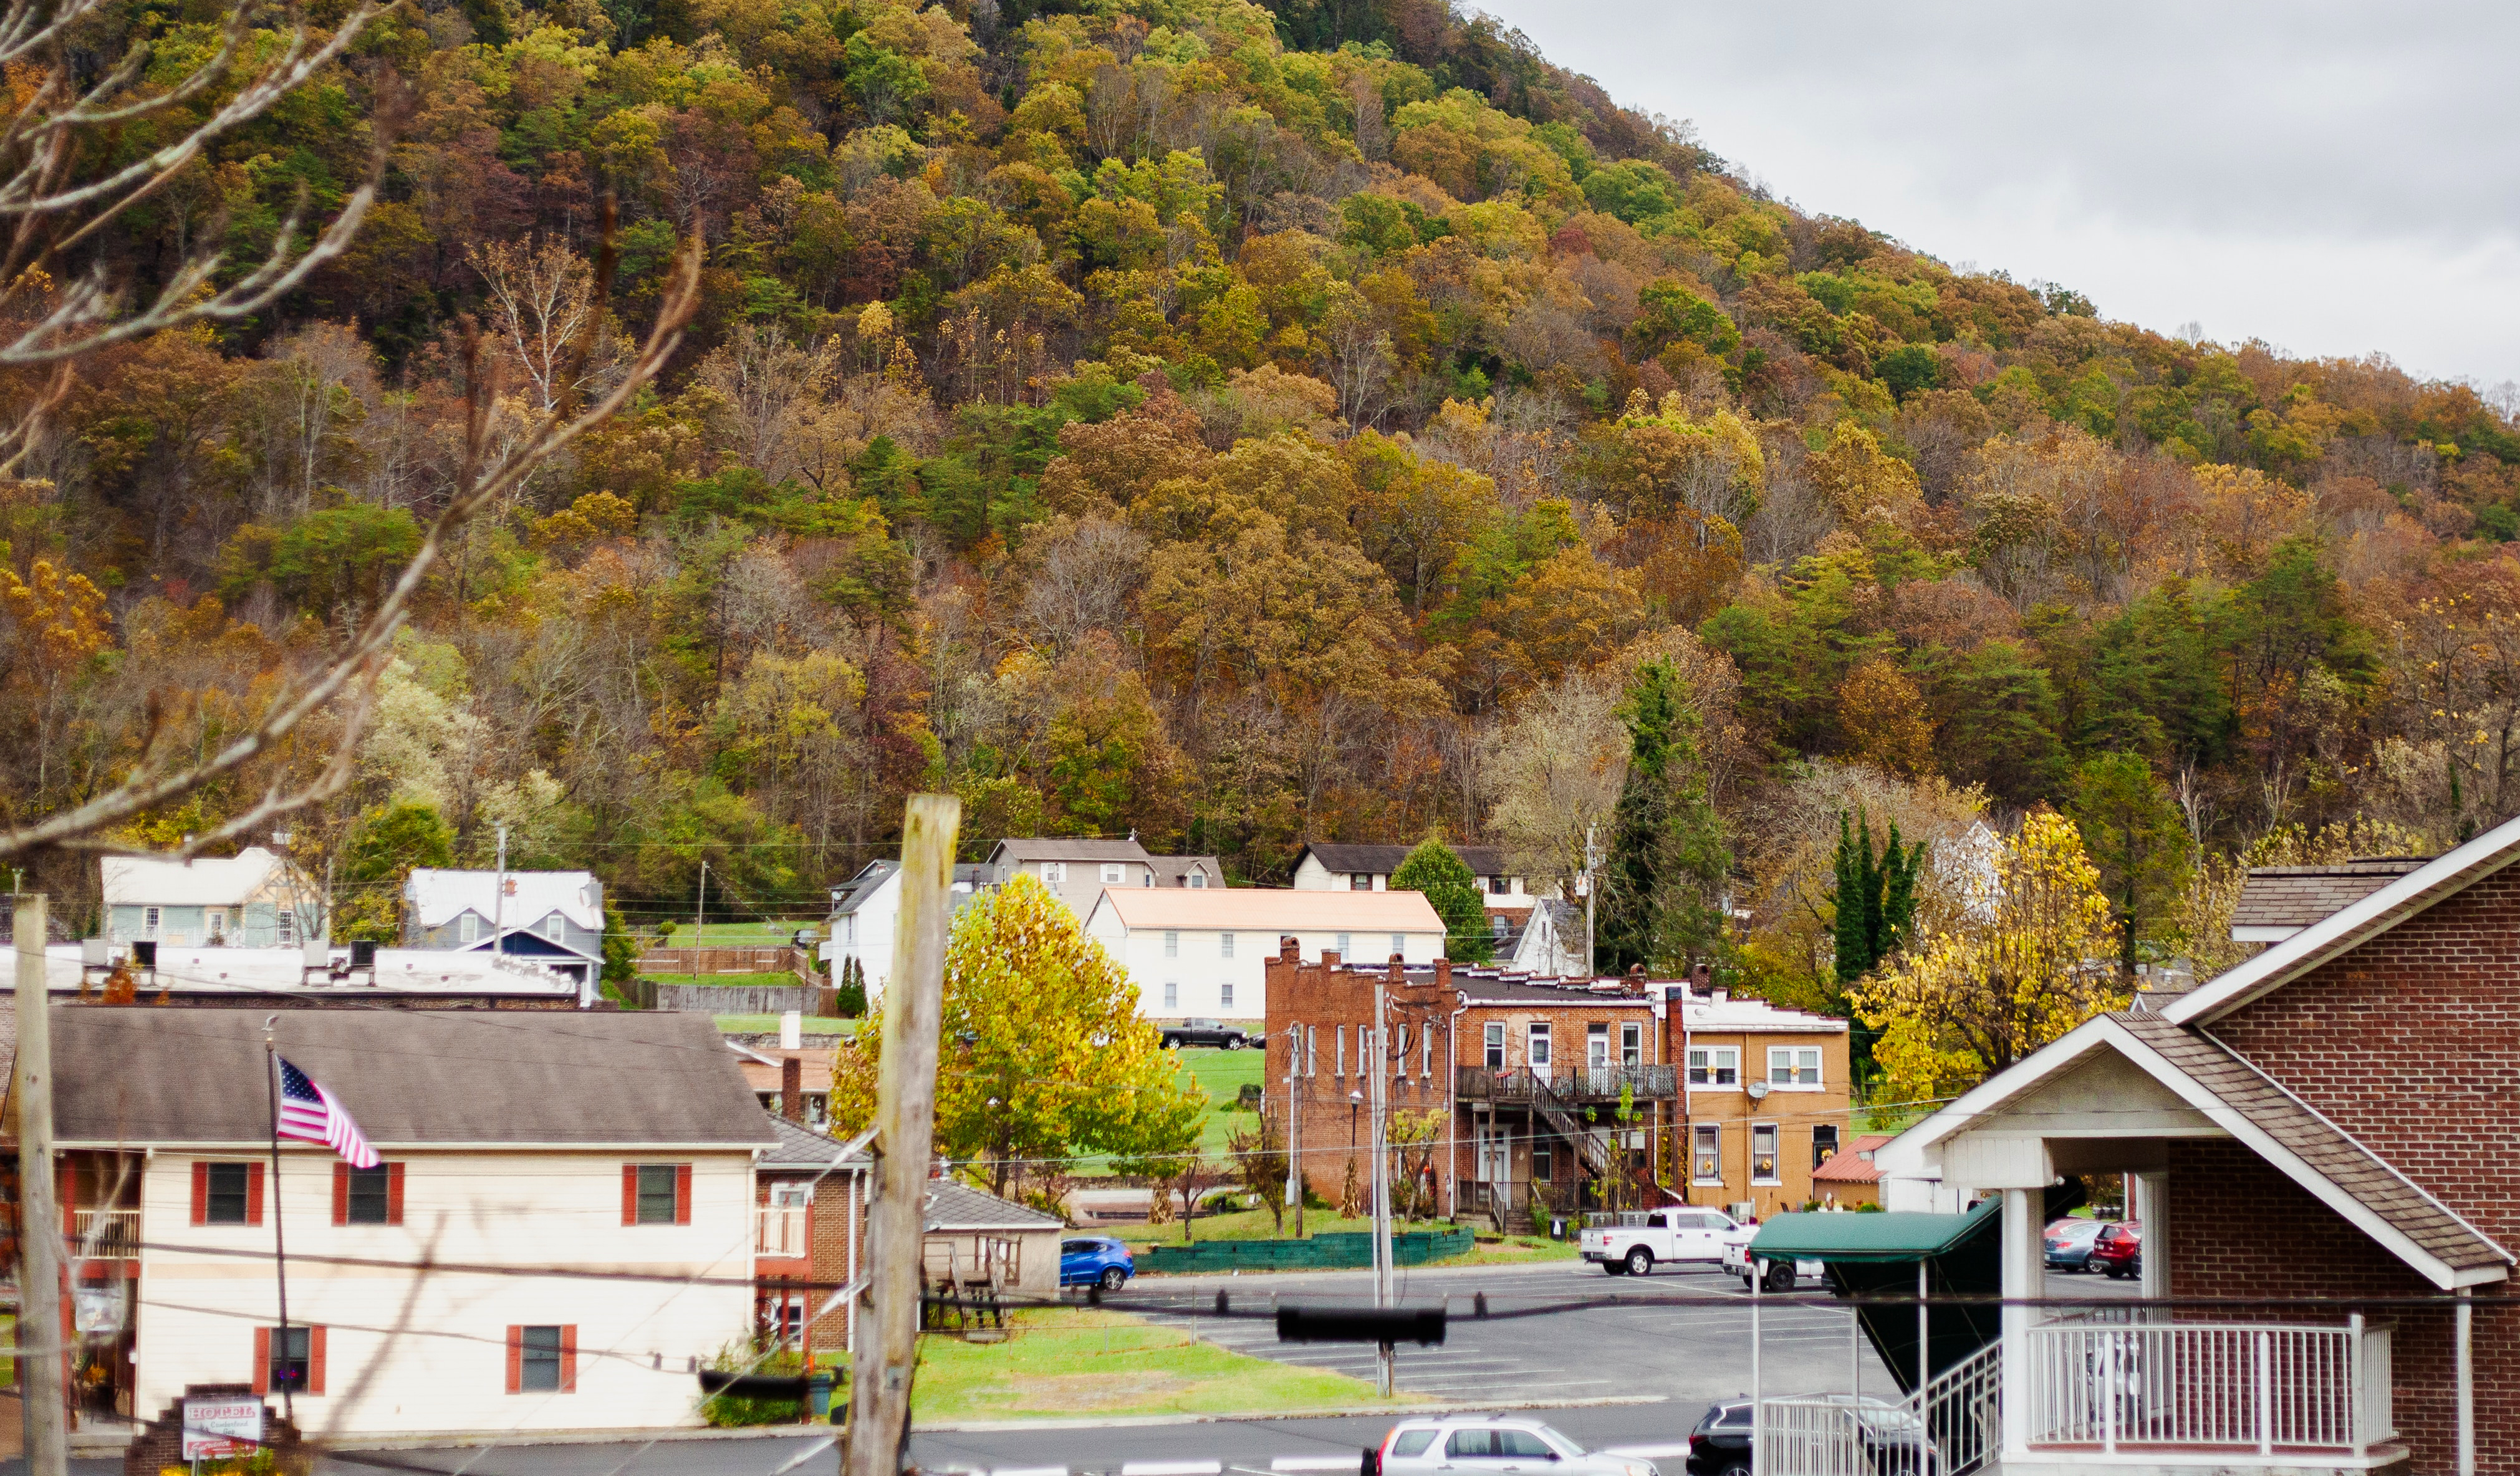 Hillside and small Appalachian town